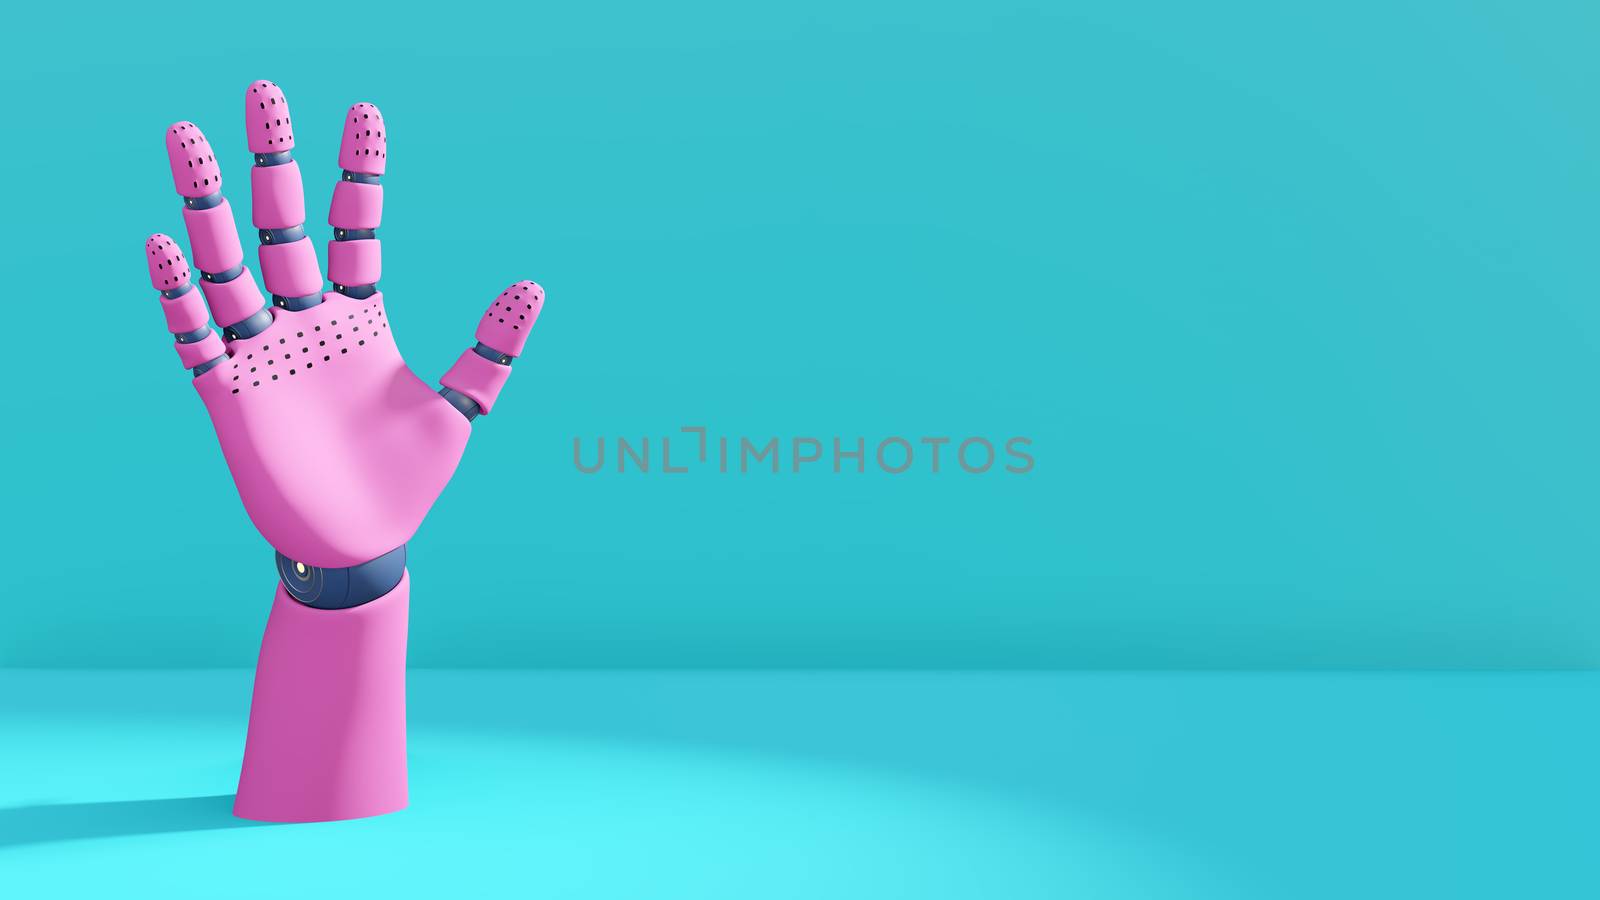 3D illustration, robot hand mannequin body part by cherezoff